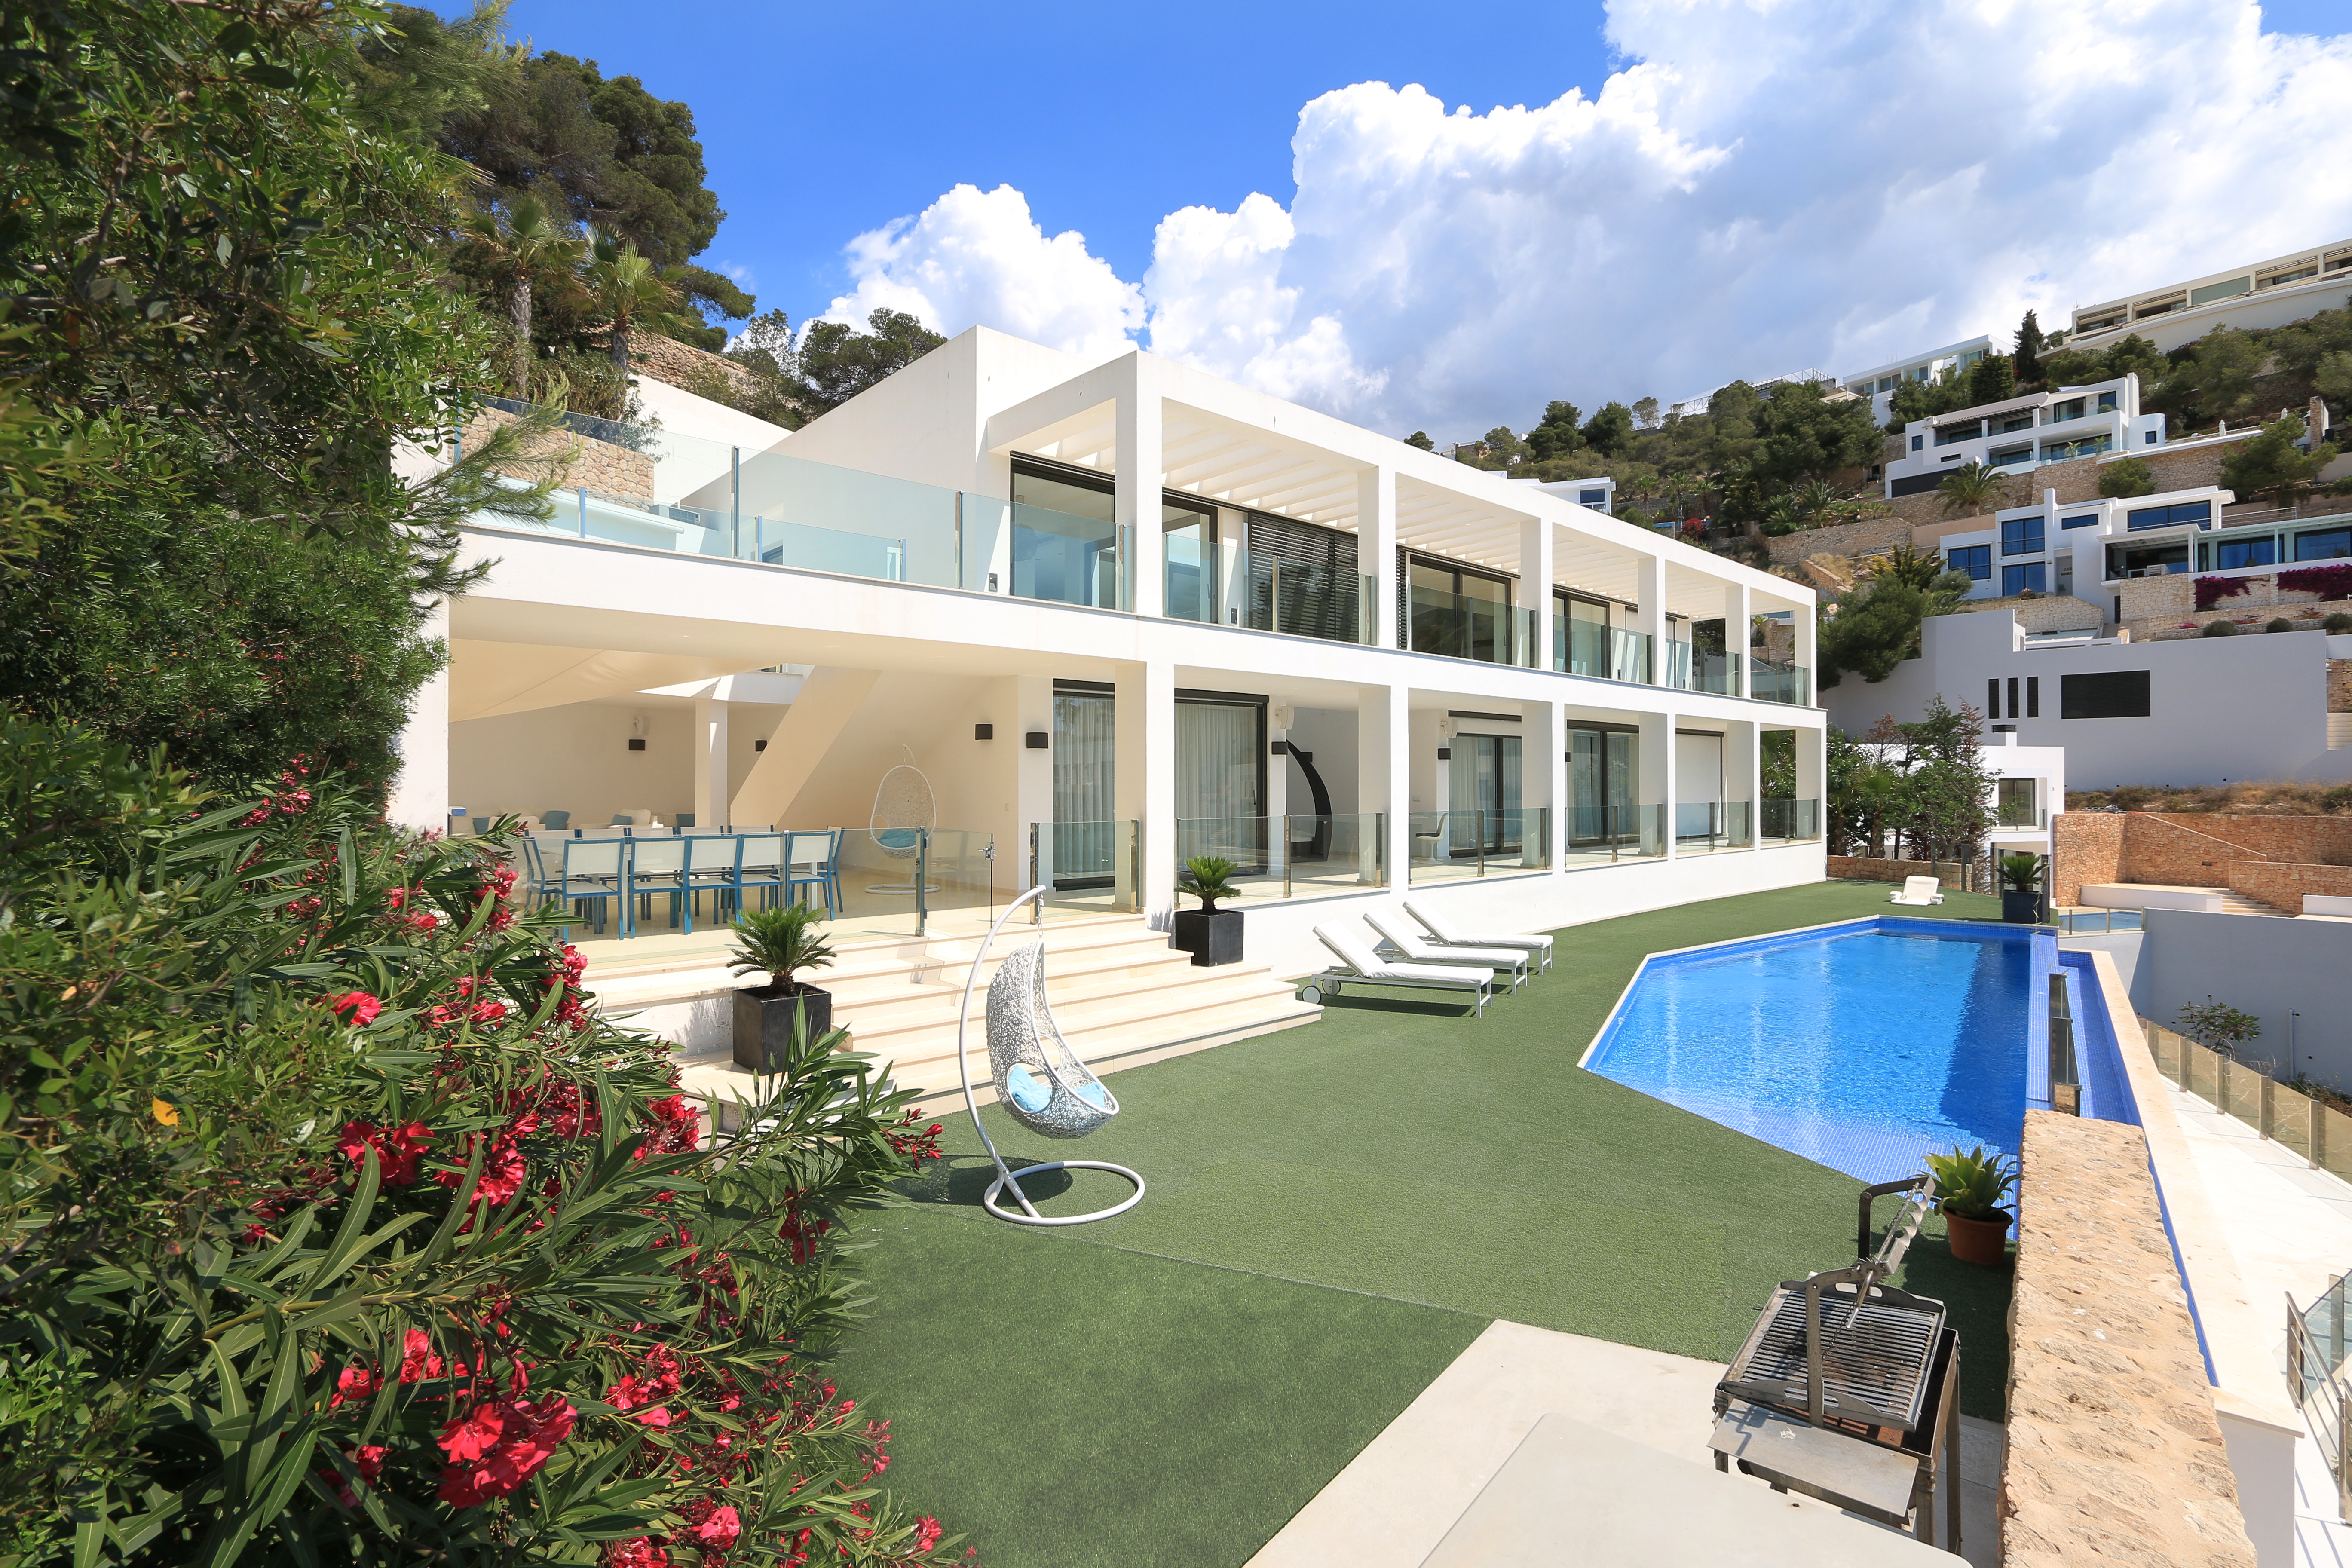 Fantastic minimalist villa in exclusive neigbourhood